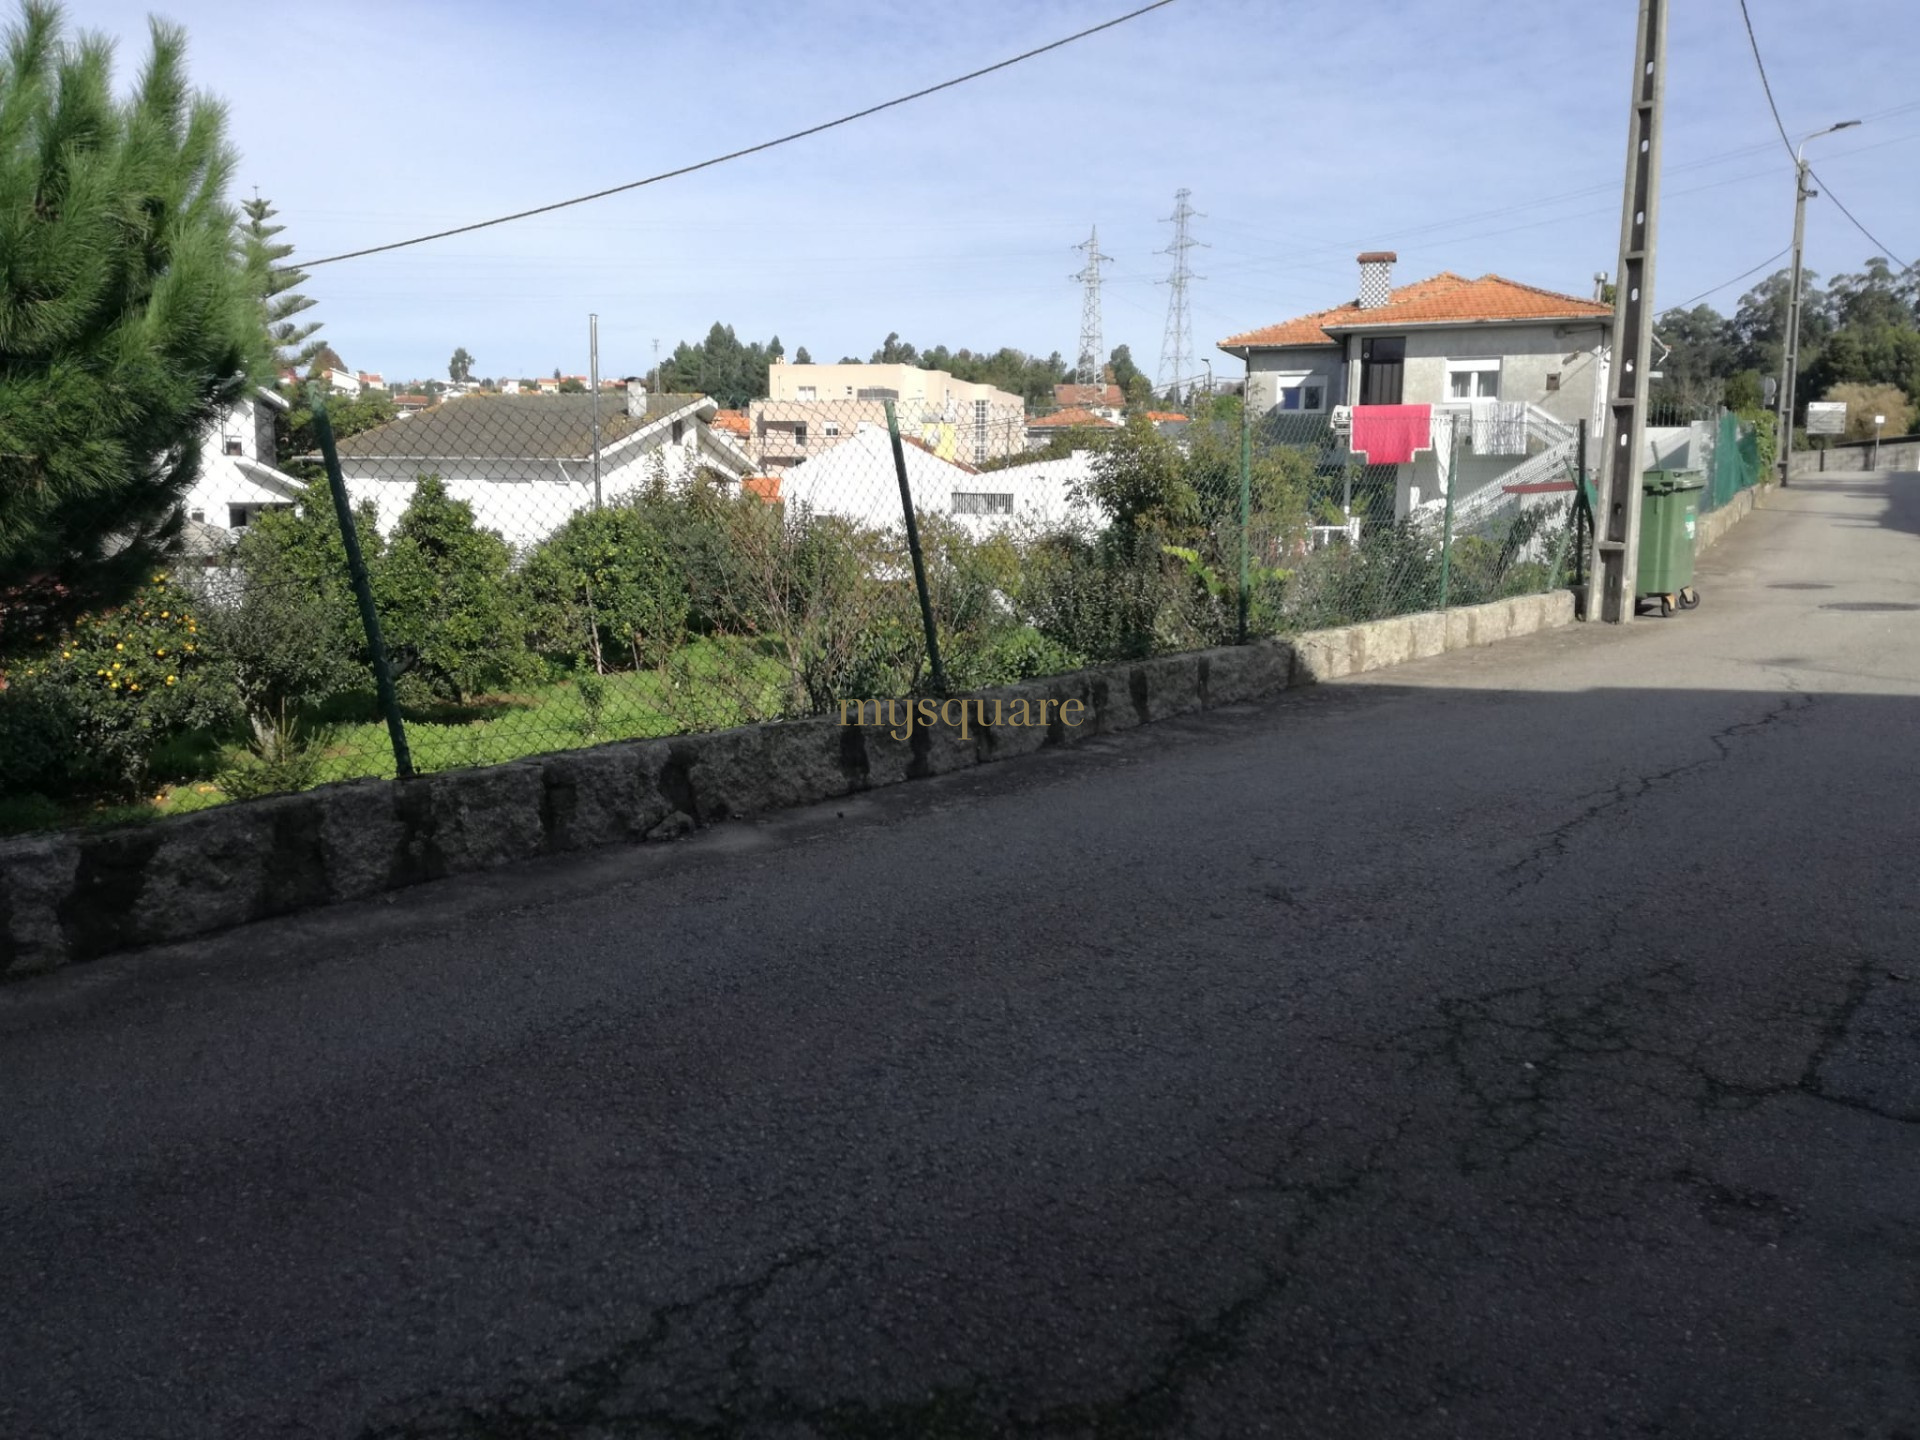 Terreno, posibilidad de construir 2 casas, Sermonde, Vila Nova de Gaia